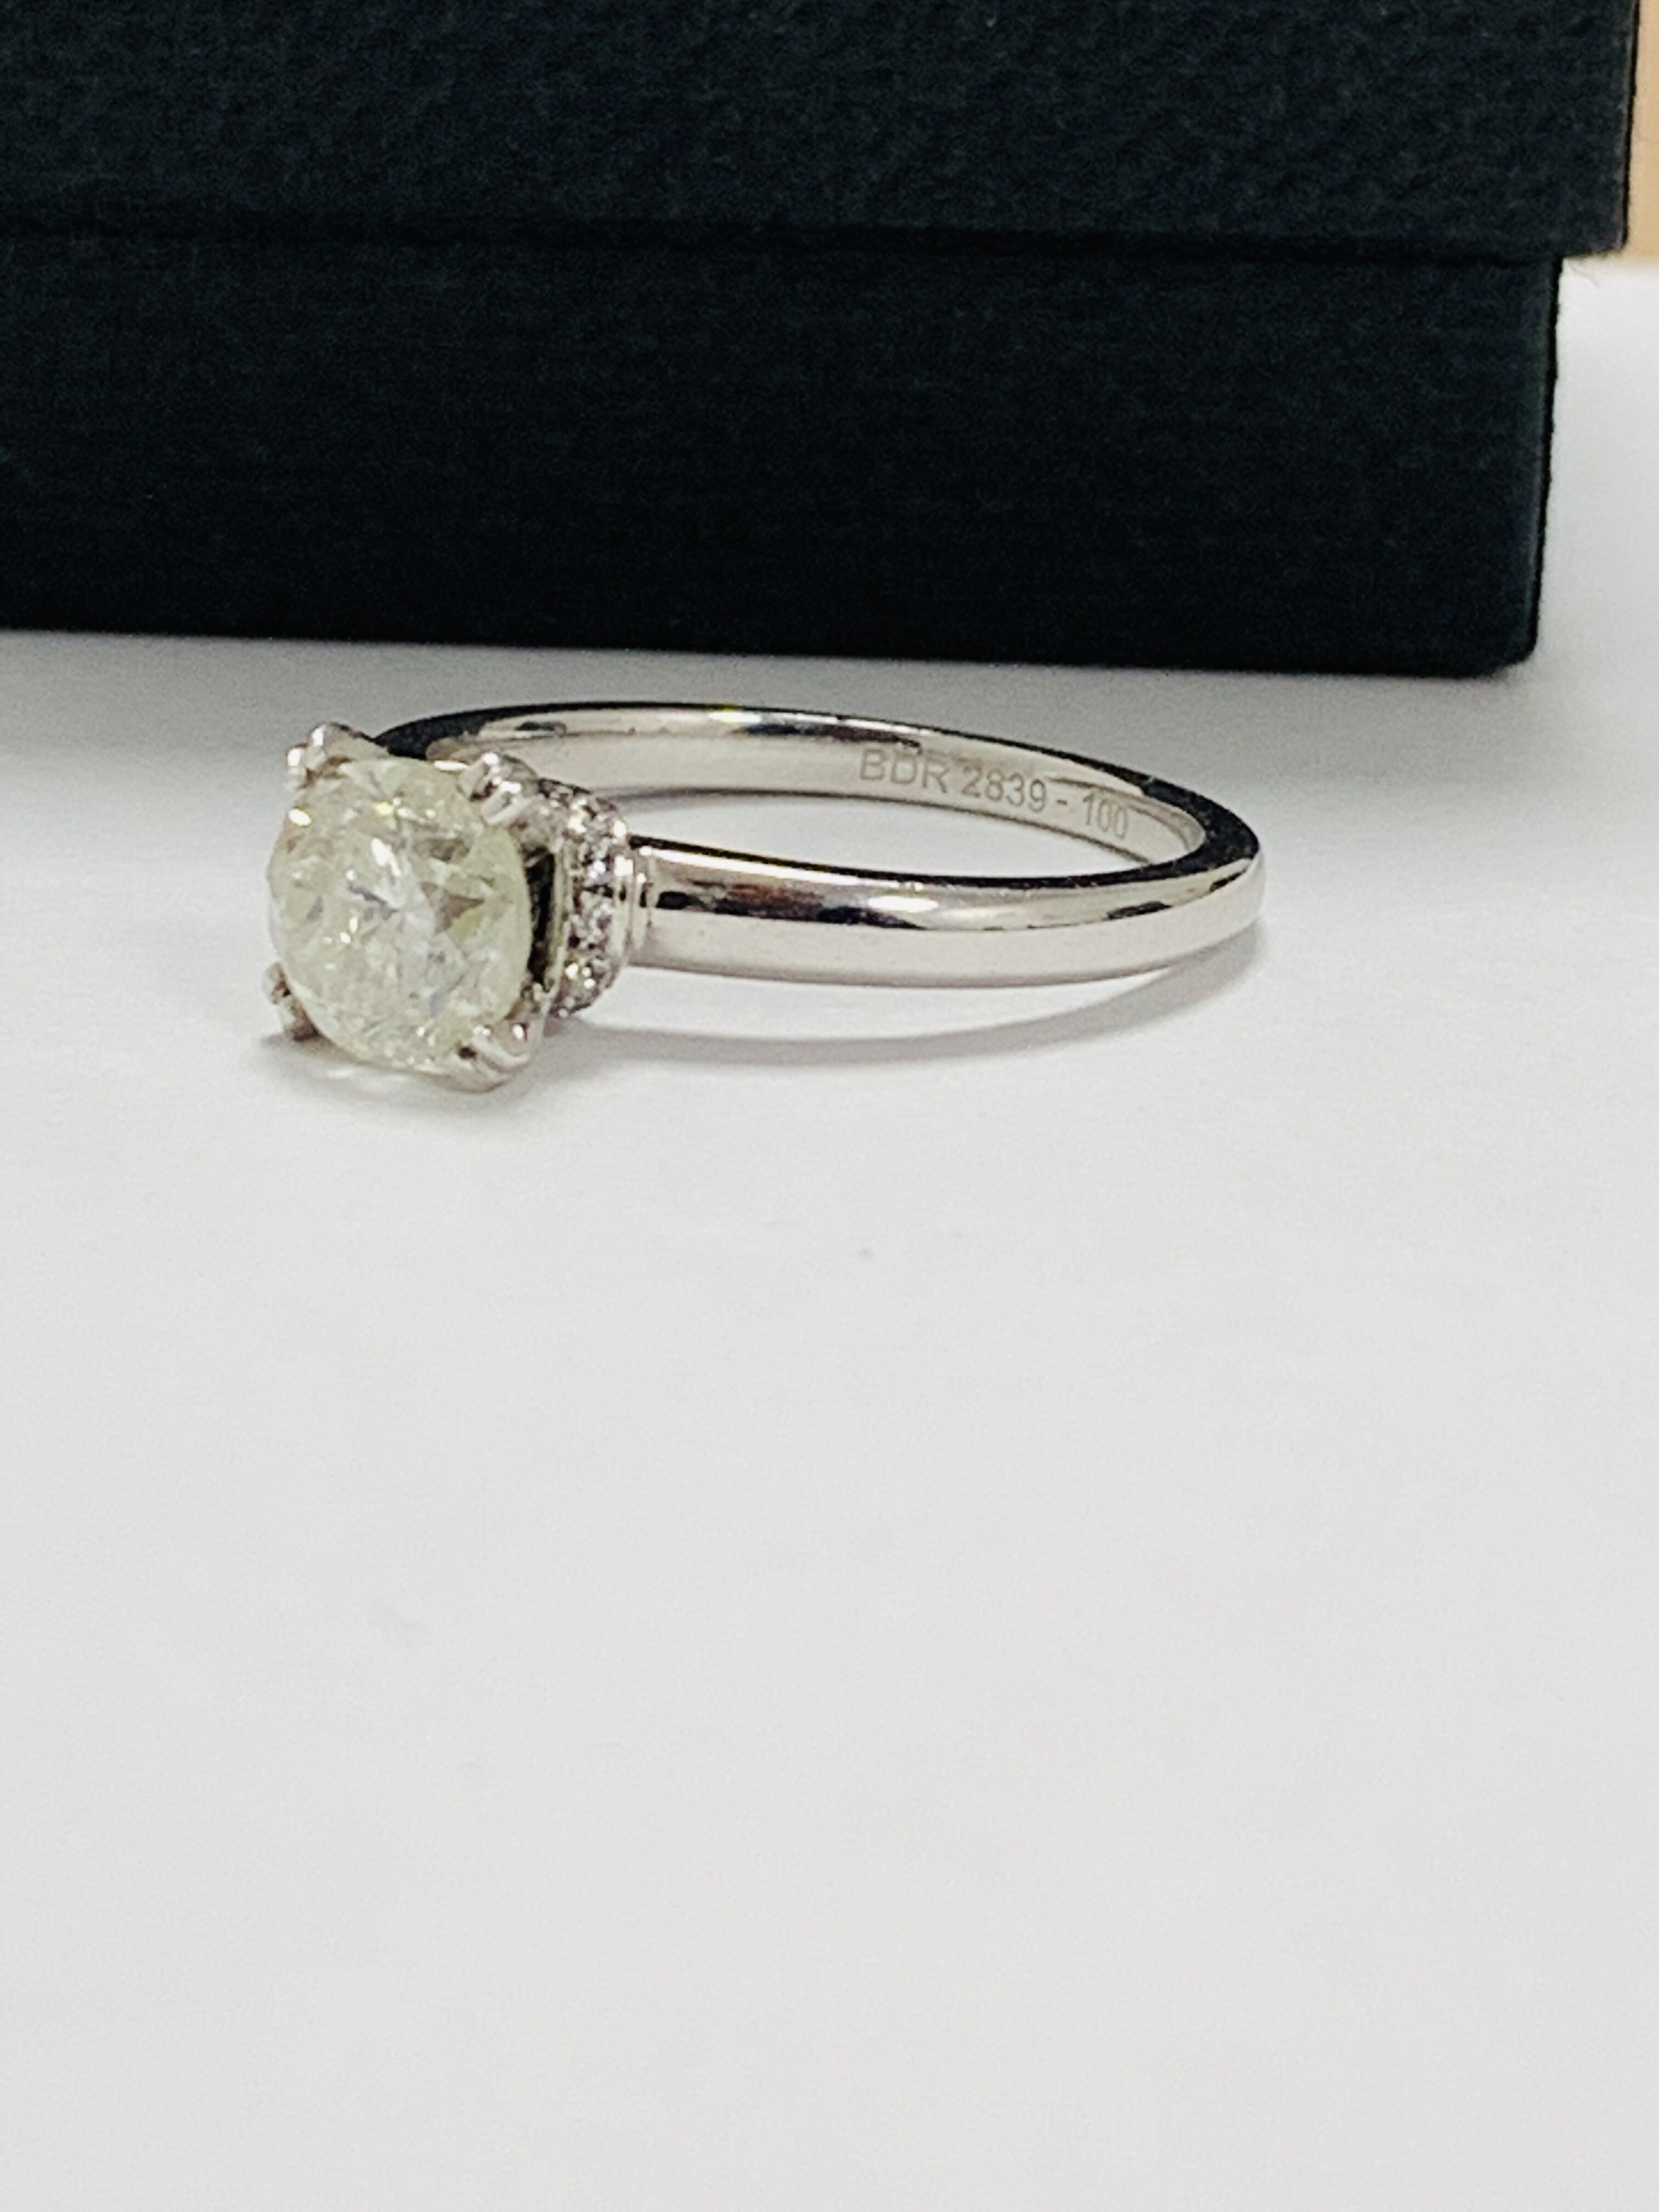 1ct Diamond Solitaire ring,PLatinum setting,diamonds in setting - Image 2 of 12